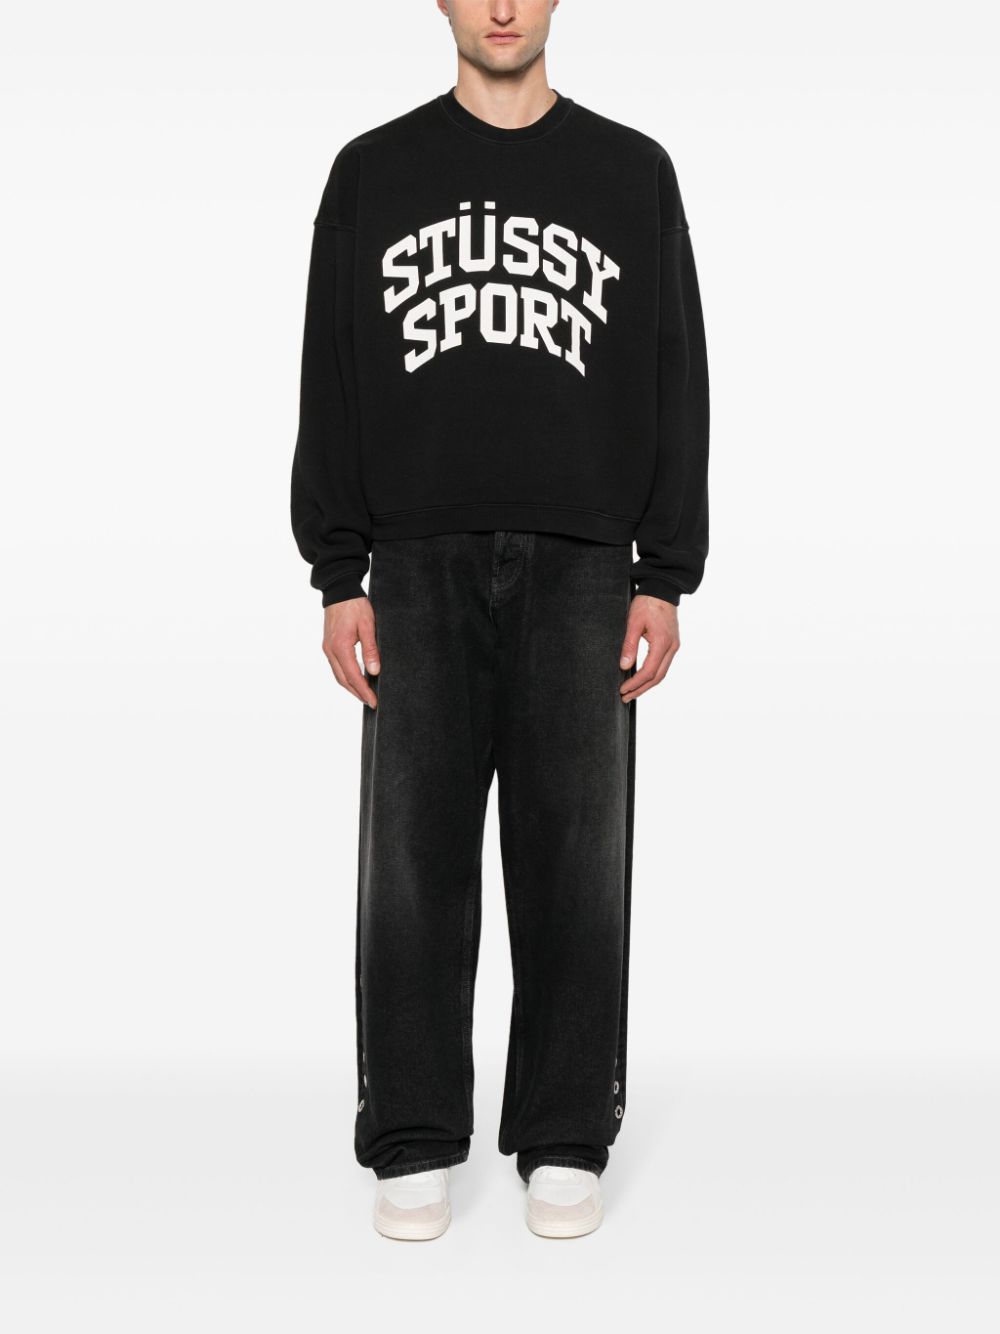 Stussy STUSSY- Logo Cotton Blend Sweatshirt